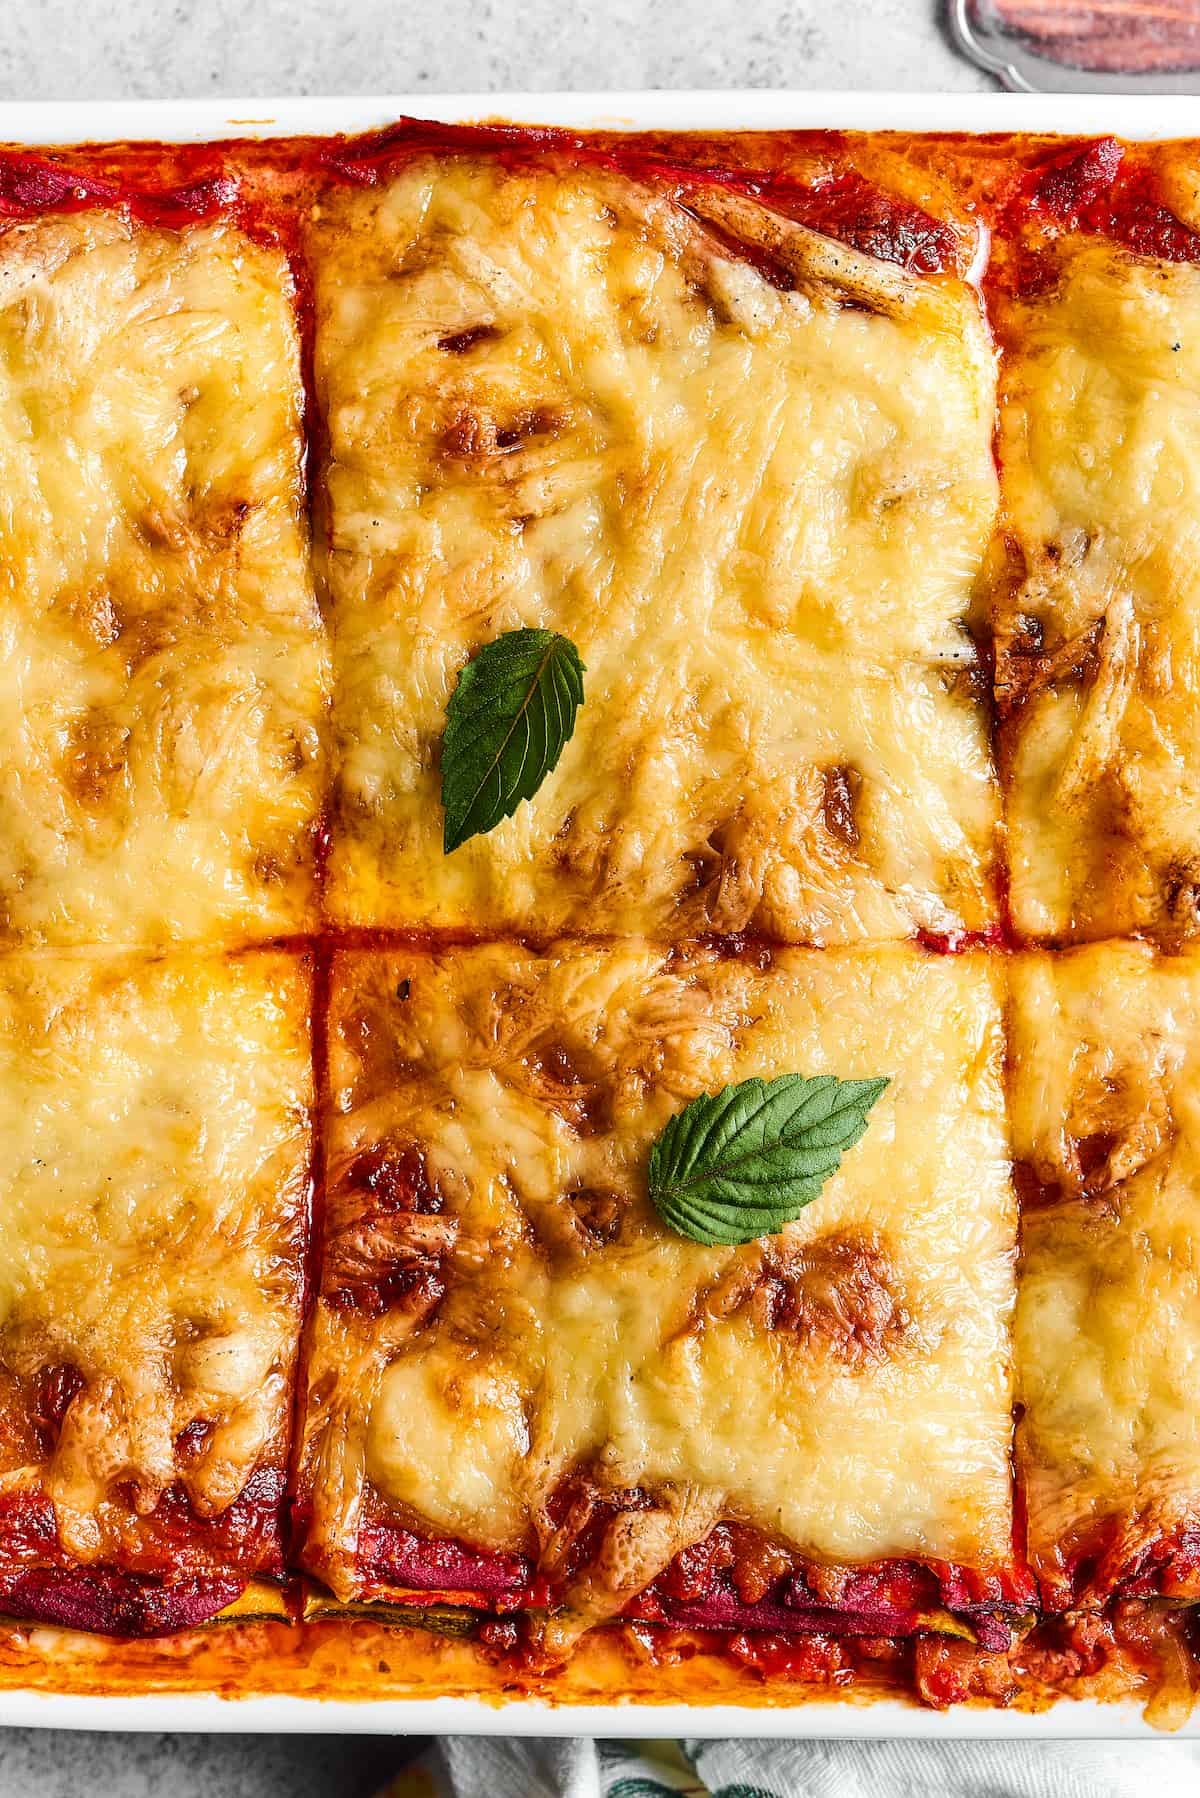 Close-up shot of a pan of baked lasagna, cut into large squares.